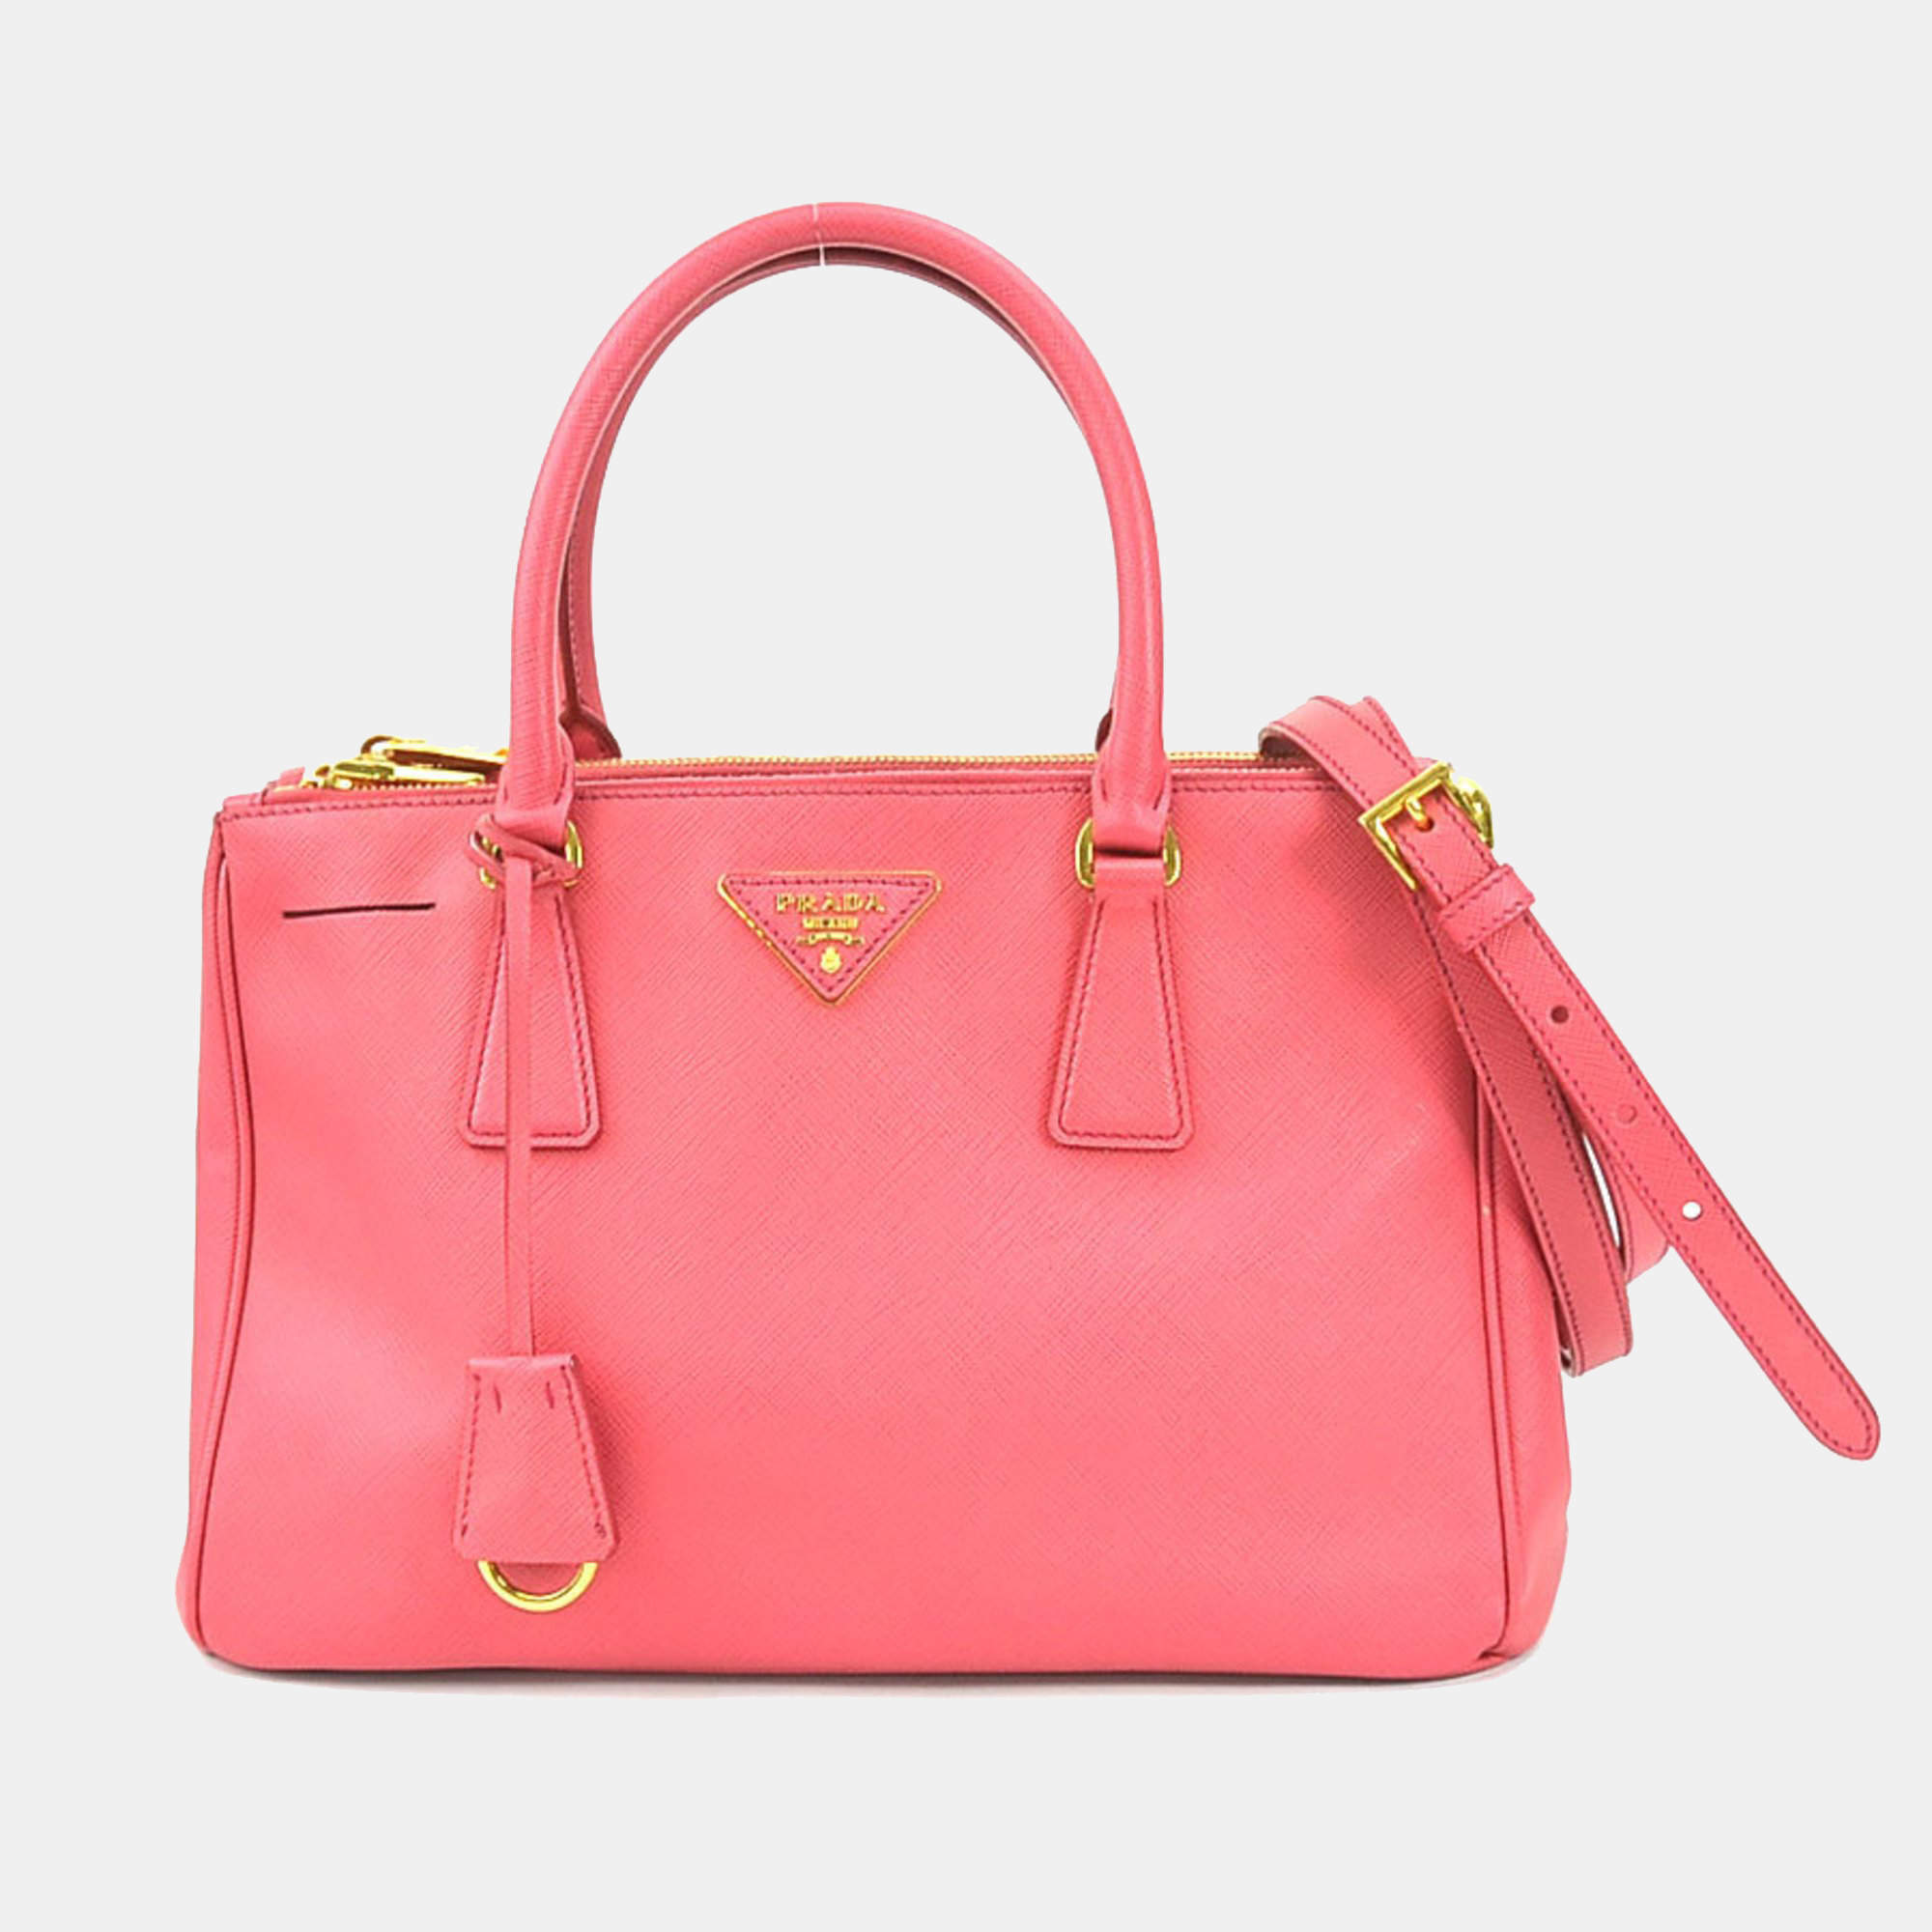 Prada Pink Leather Saffiano Small Galleria Tote Bag Prada